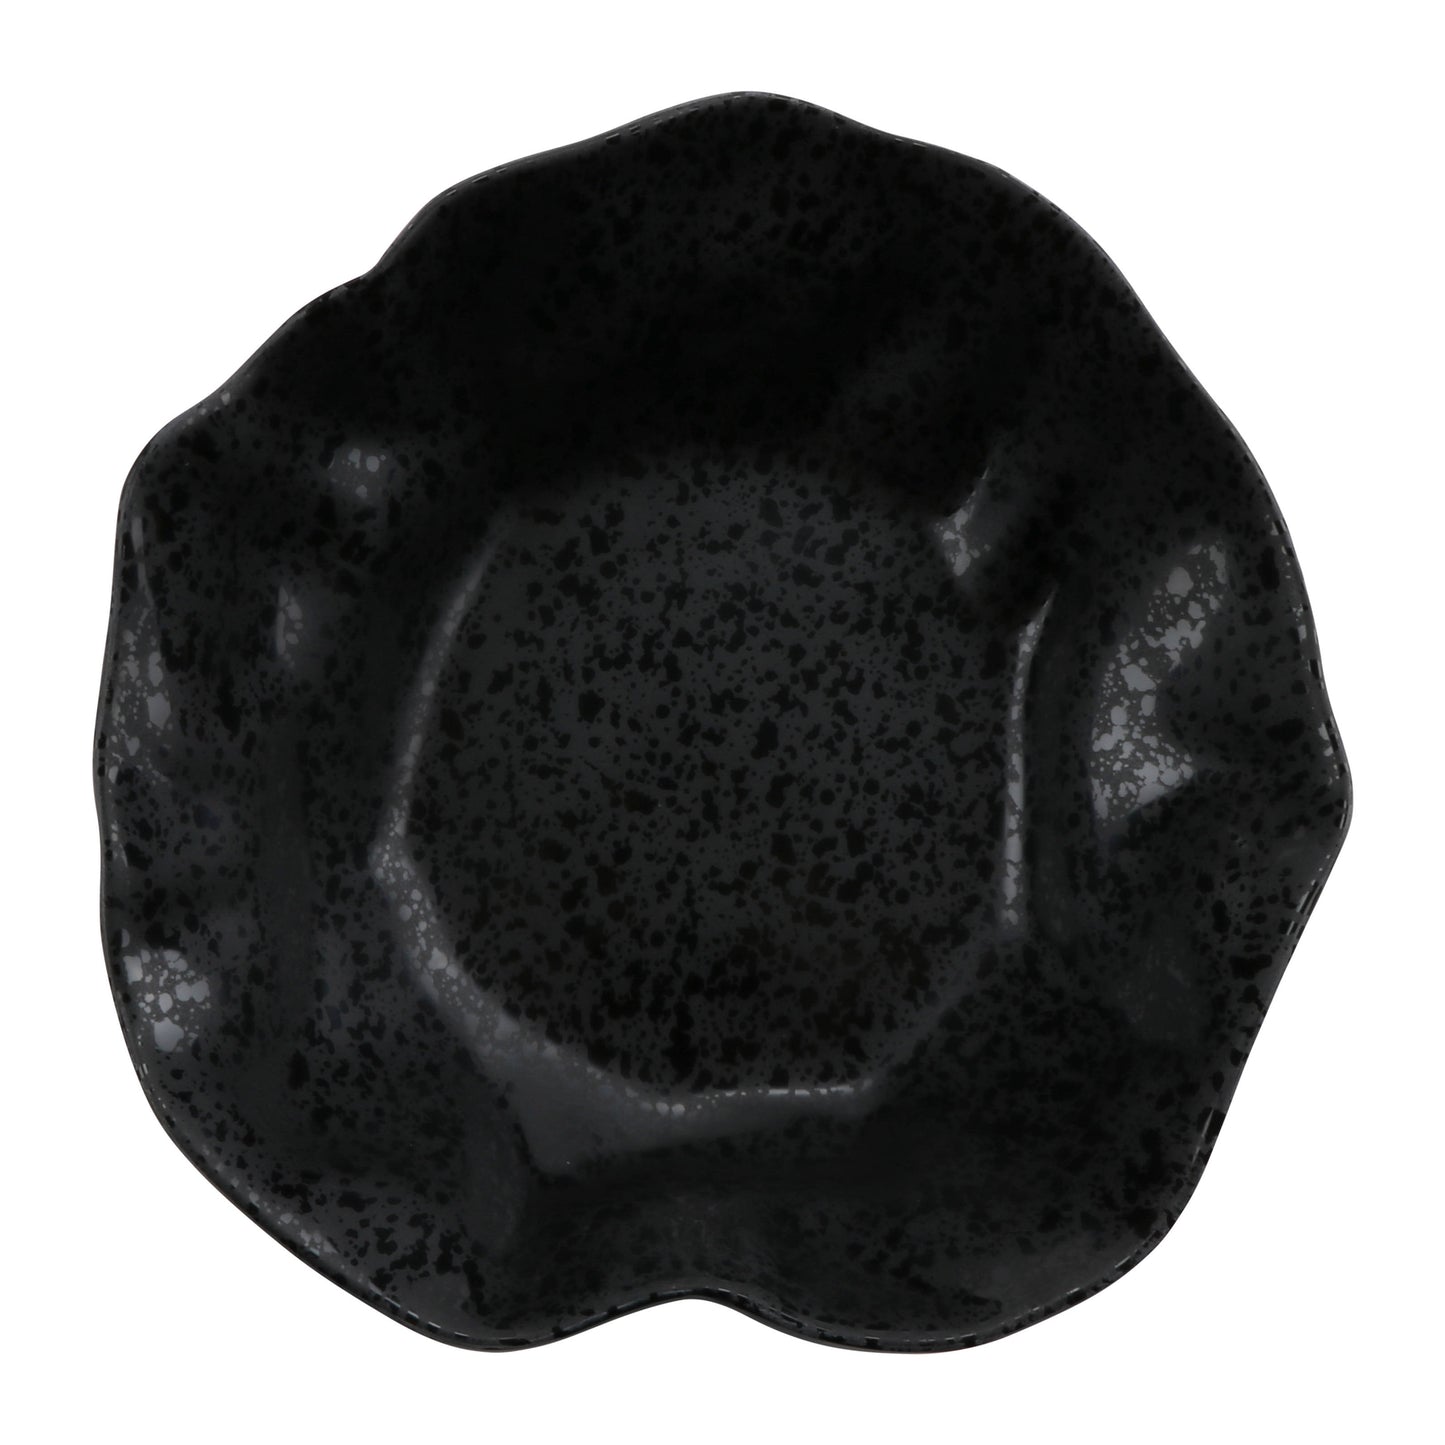 23.67 oz rainex showered black medium melamine bowl, 7.5"L x 7.5"W x 1.5"H, GET, cheforward